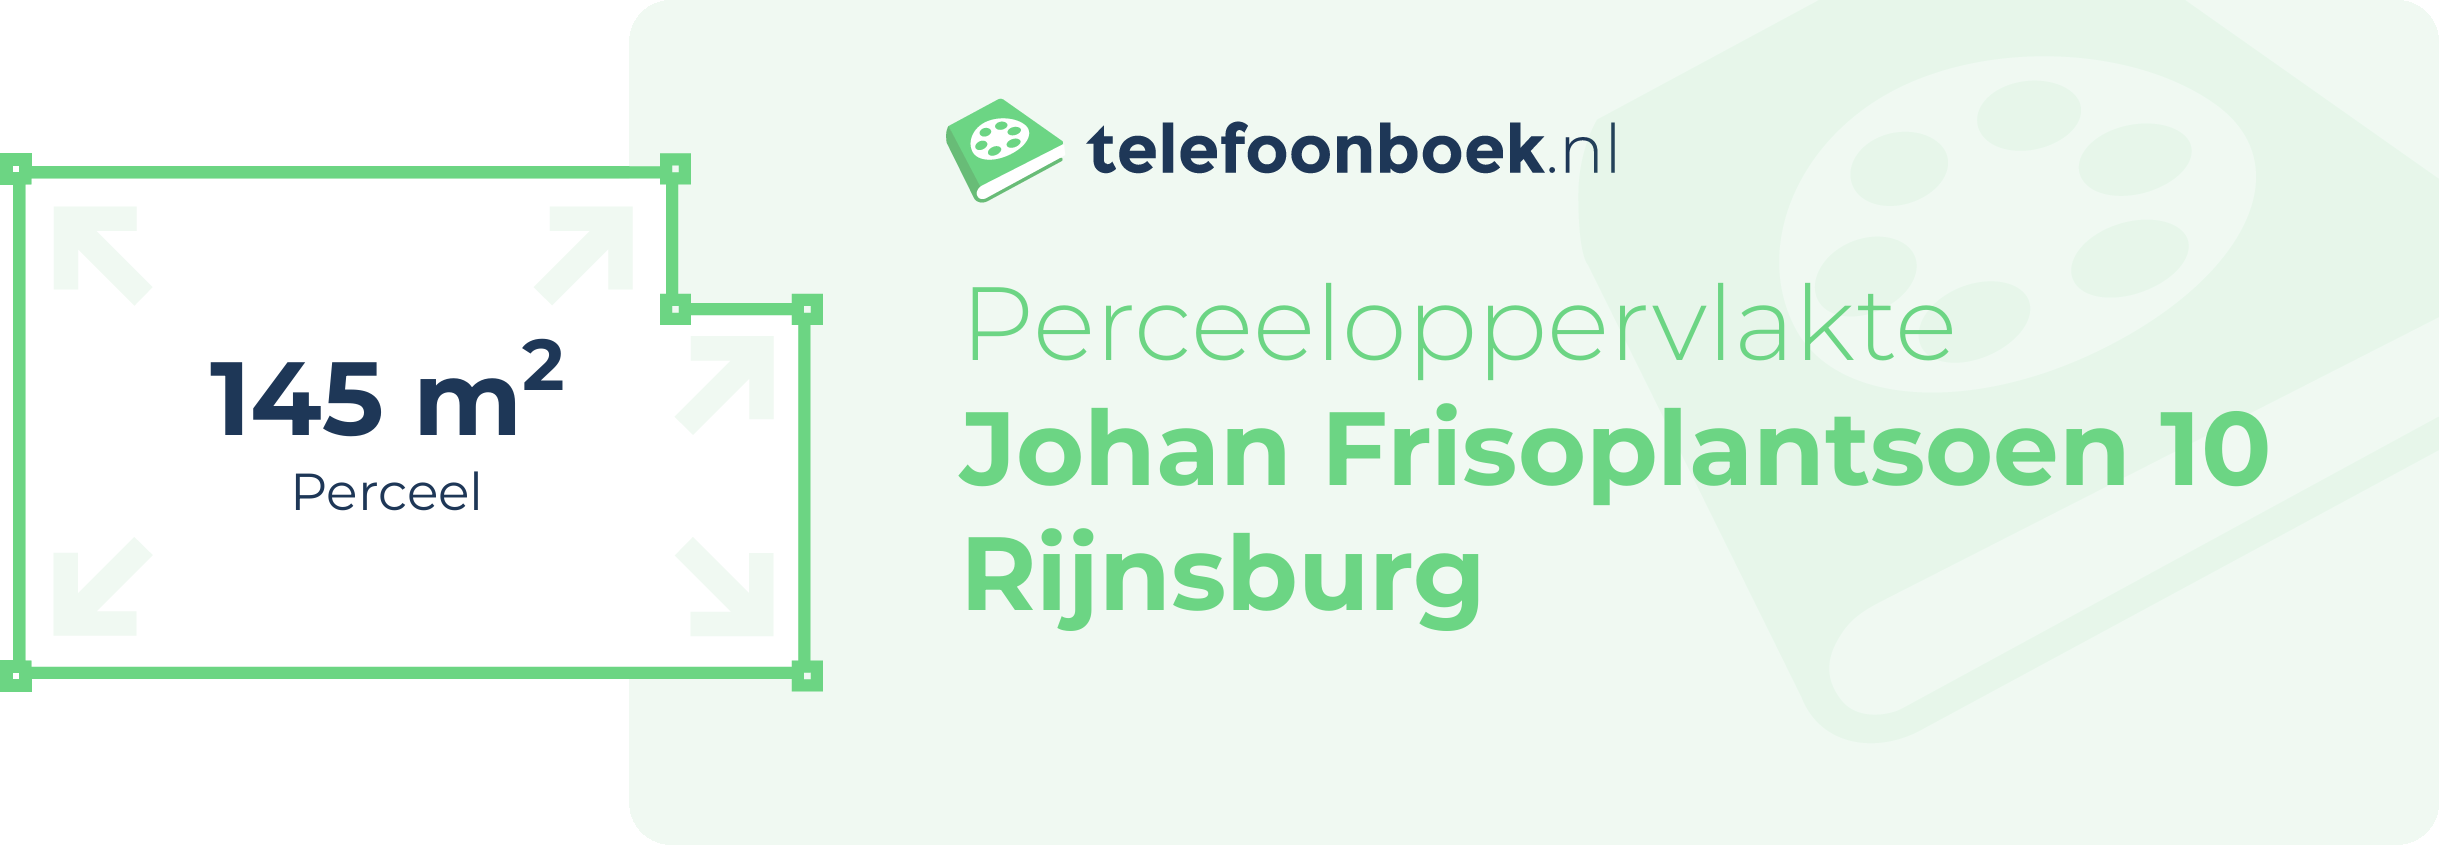 Perceeloppervlakte Johan Frisoplantsoen 10 Rijnsburg